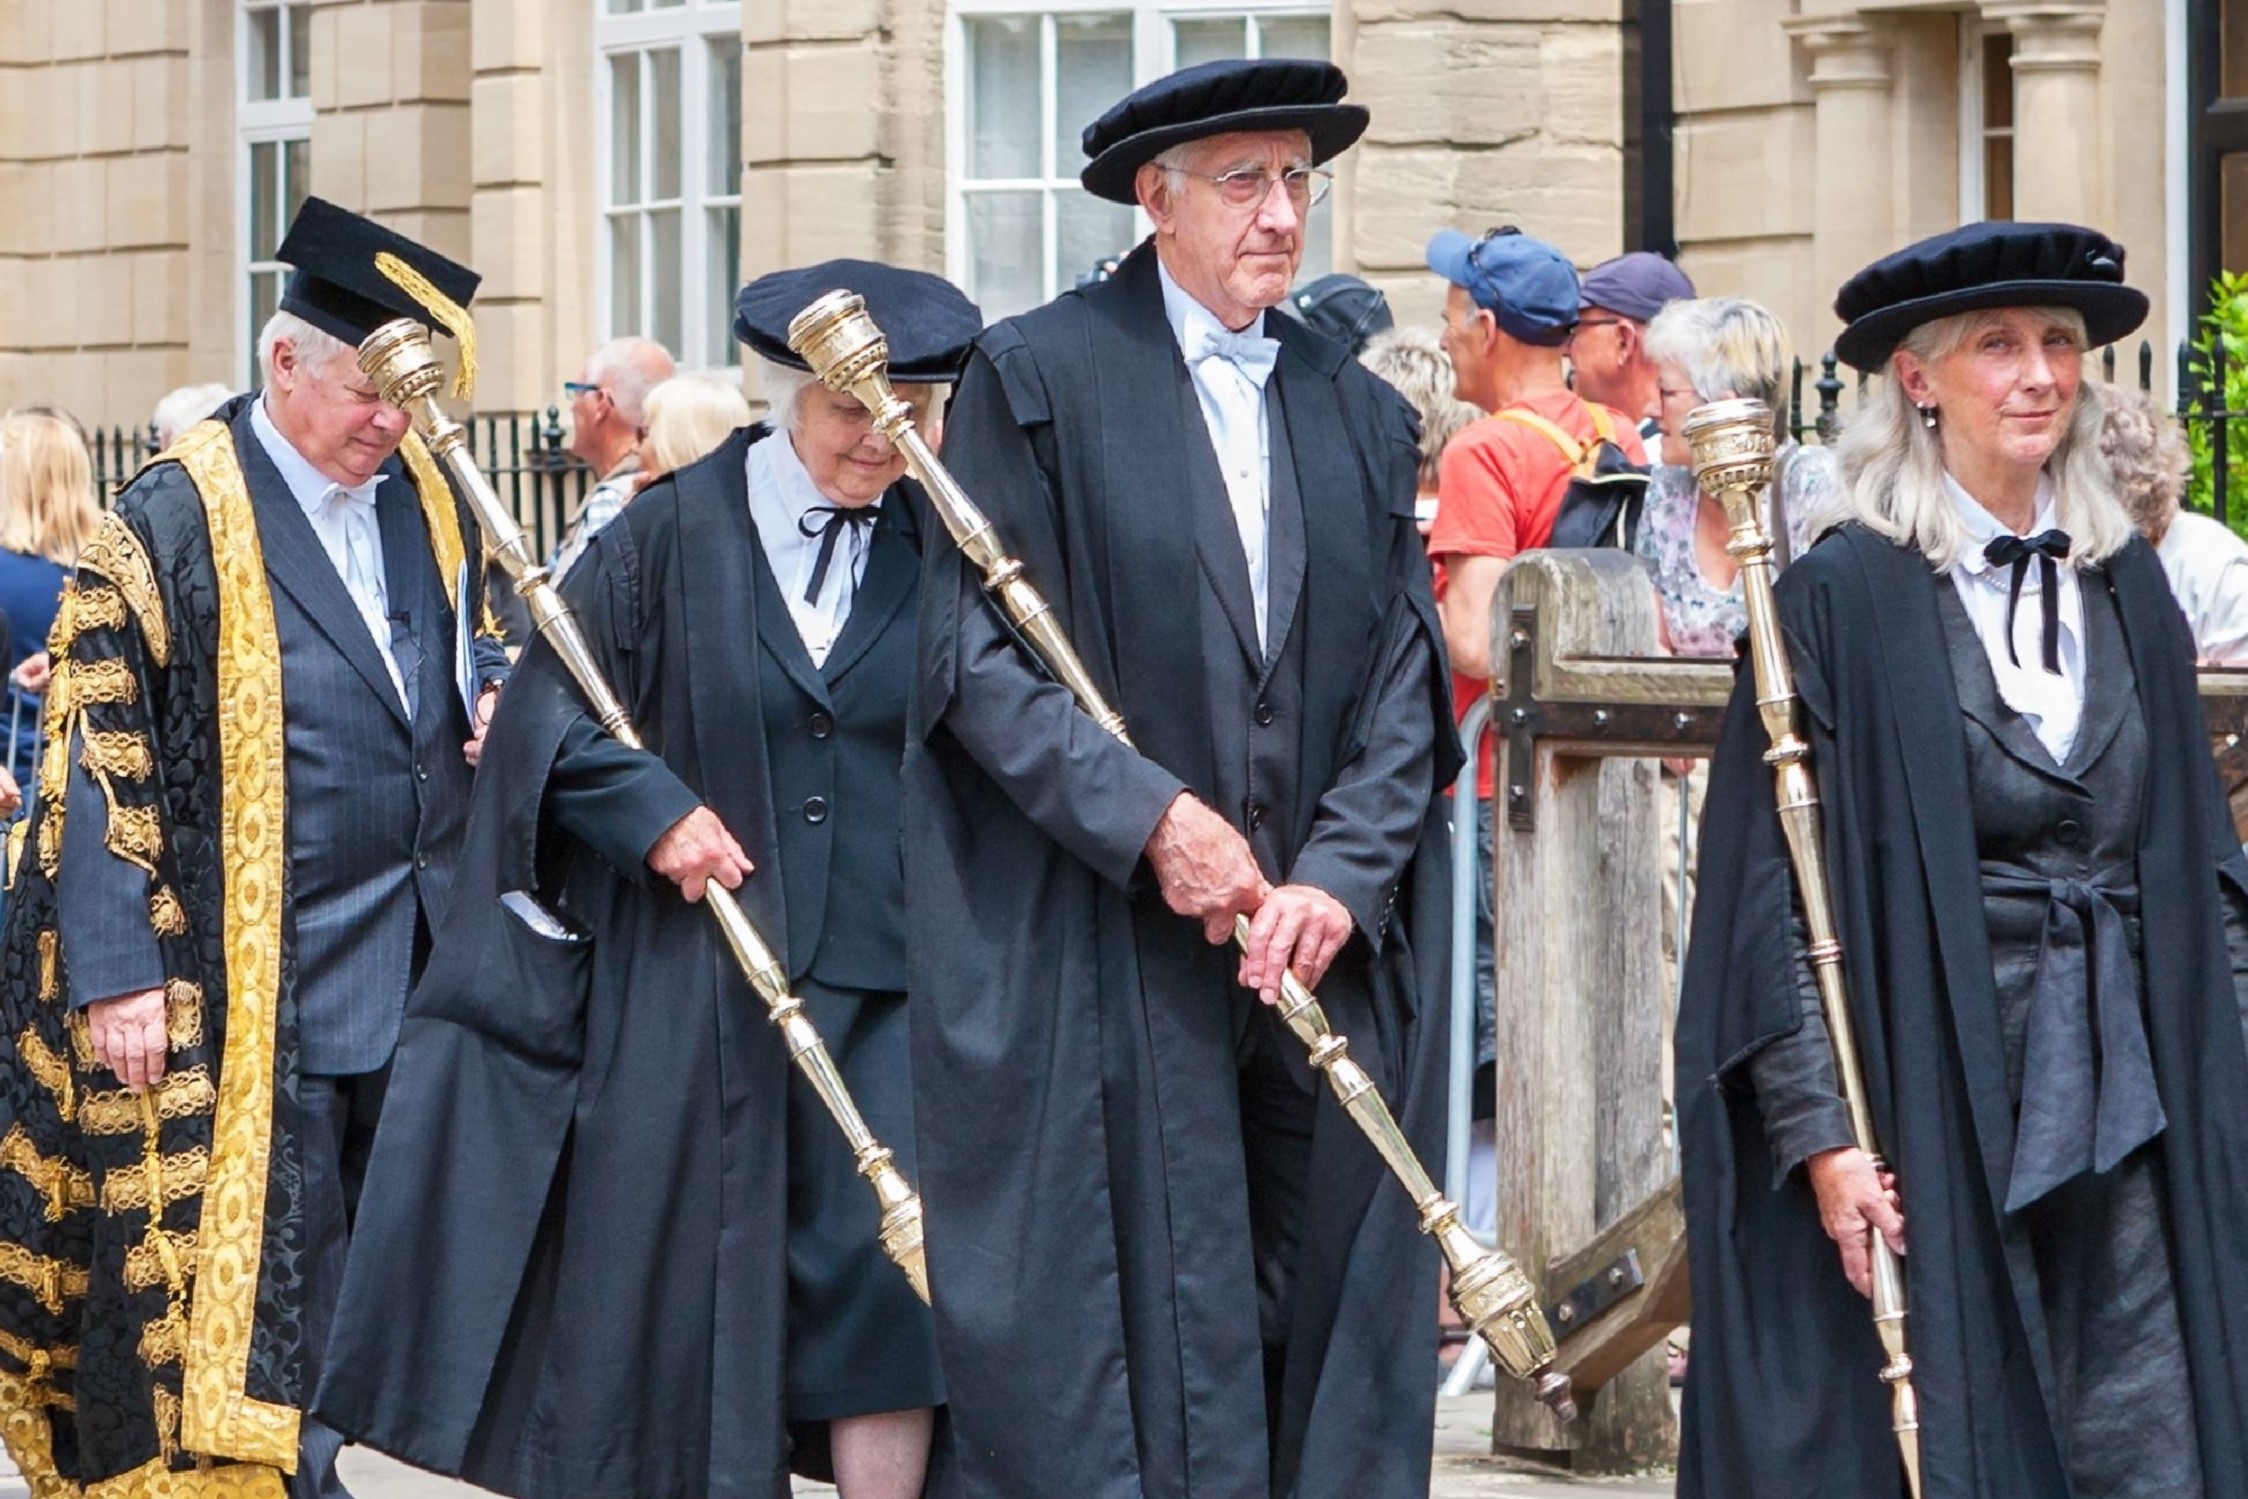 Cambridge University procession of academics